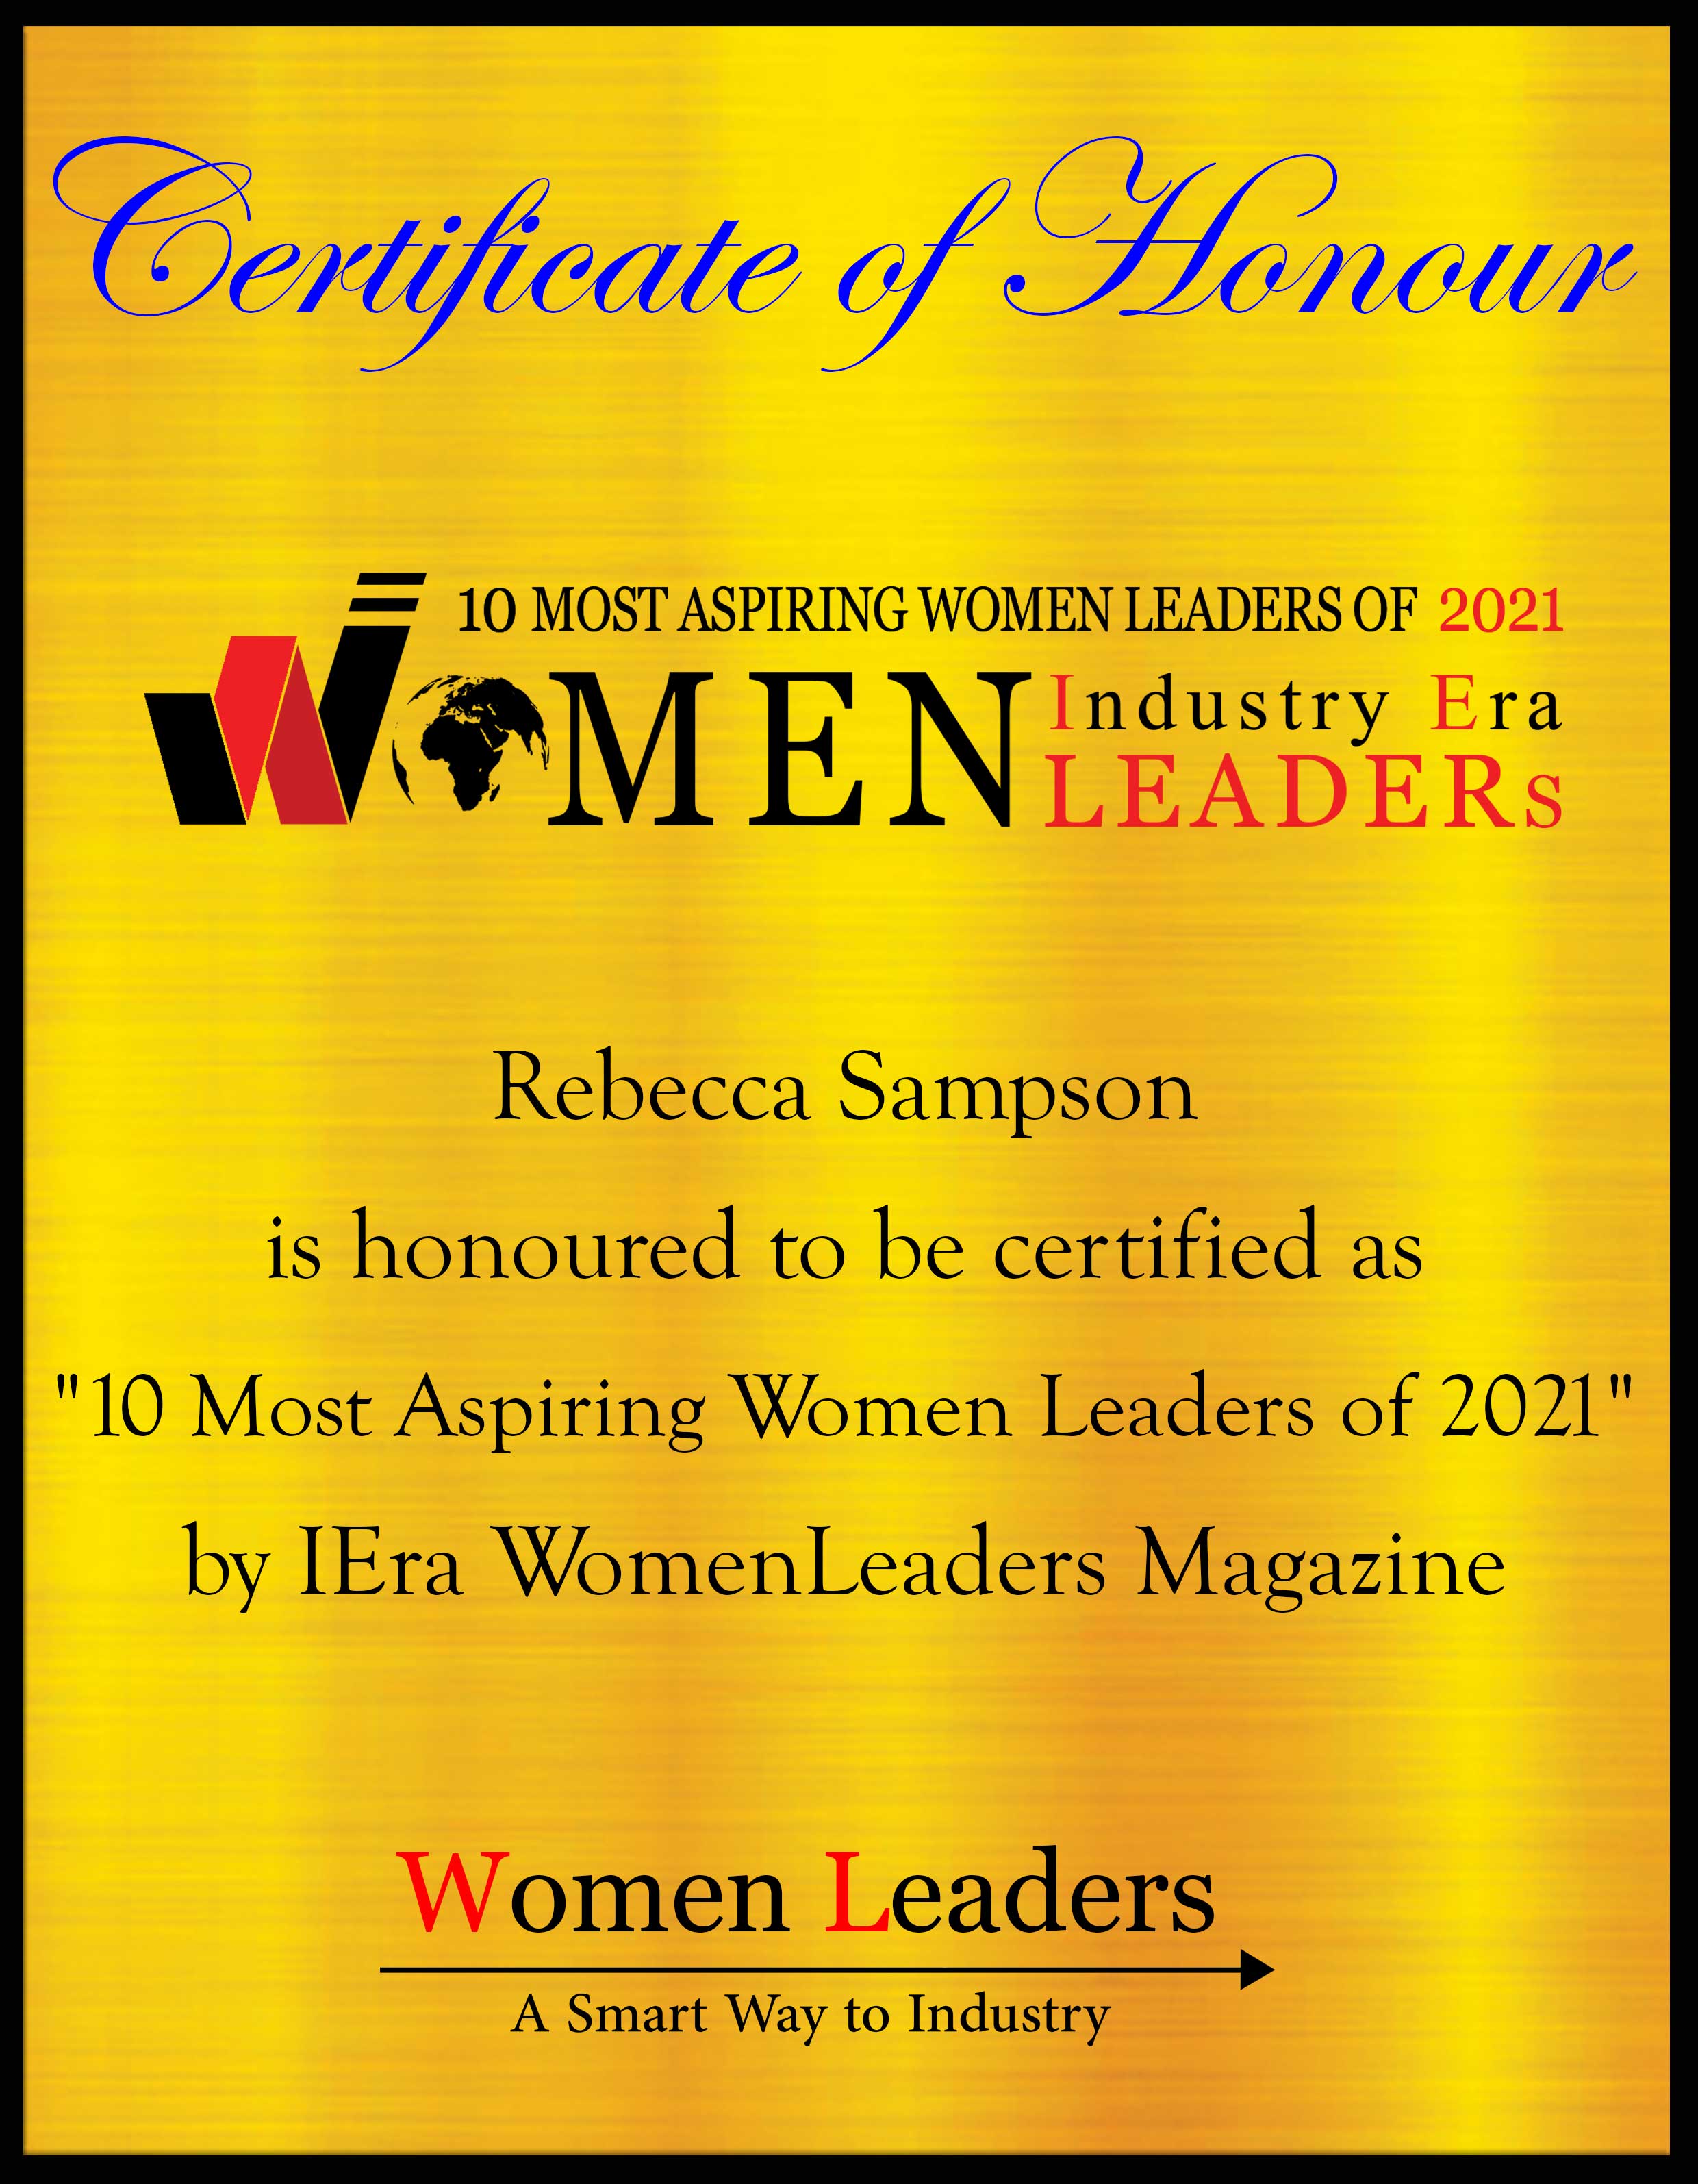 Rebecca Sampson, Director, Marketing - Canadian Division at Teladoc Health, Most Aspiring Women Leaders of 2021